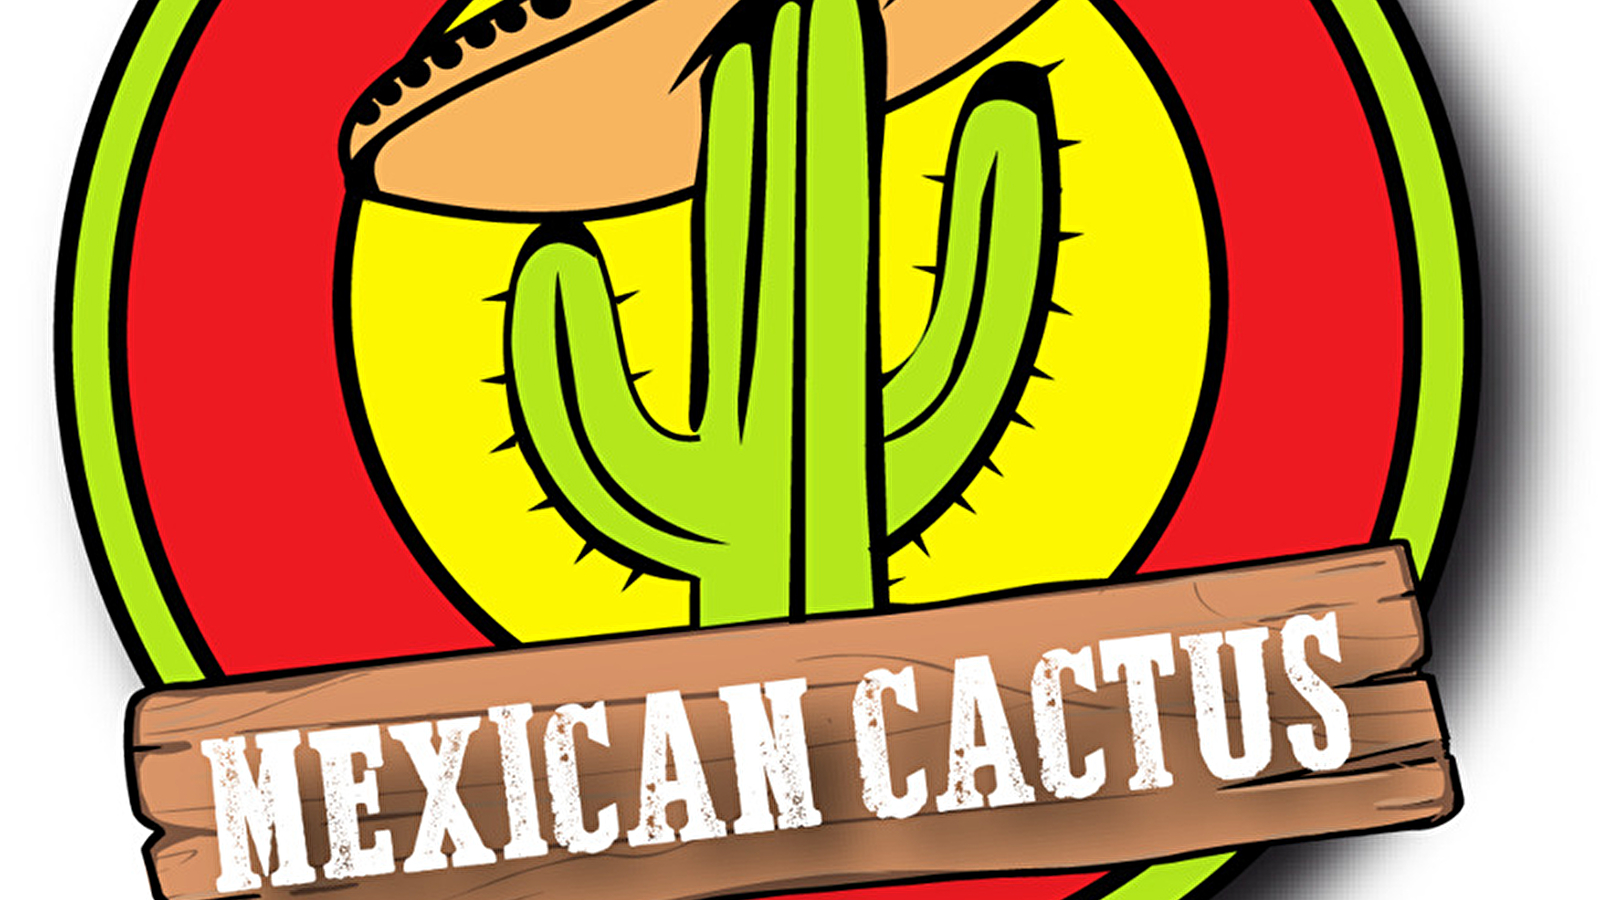 Restaurant - Mexican Cactus